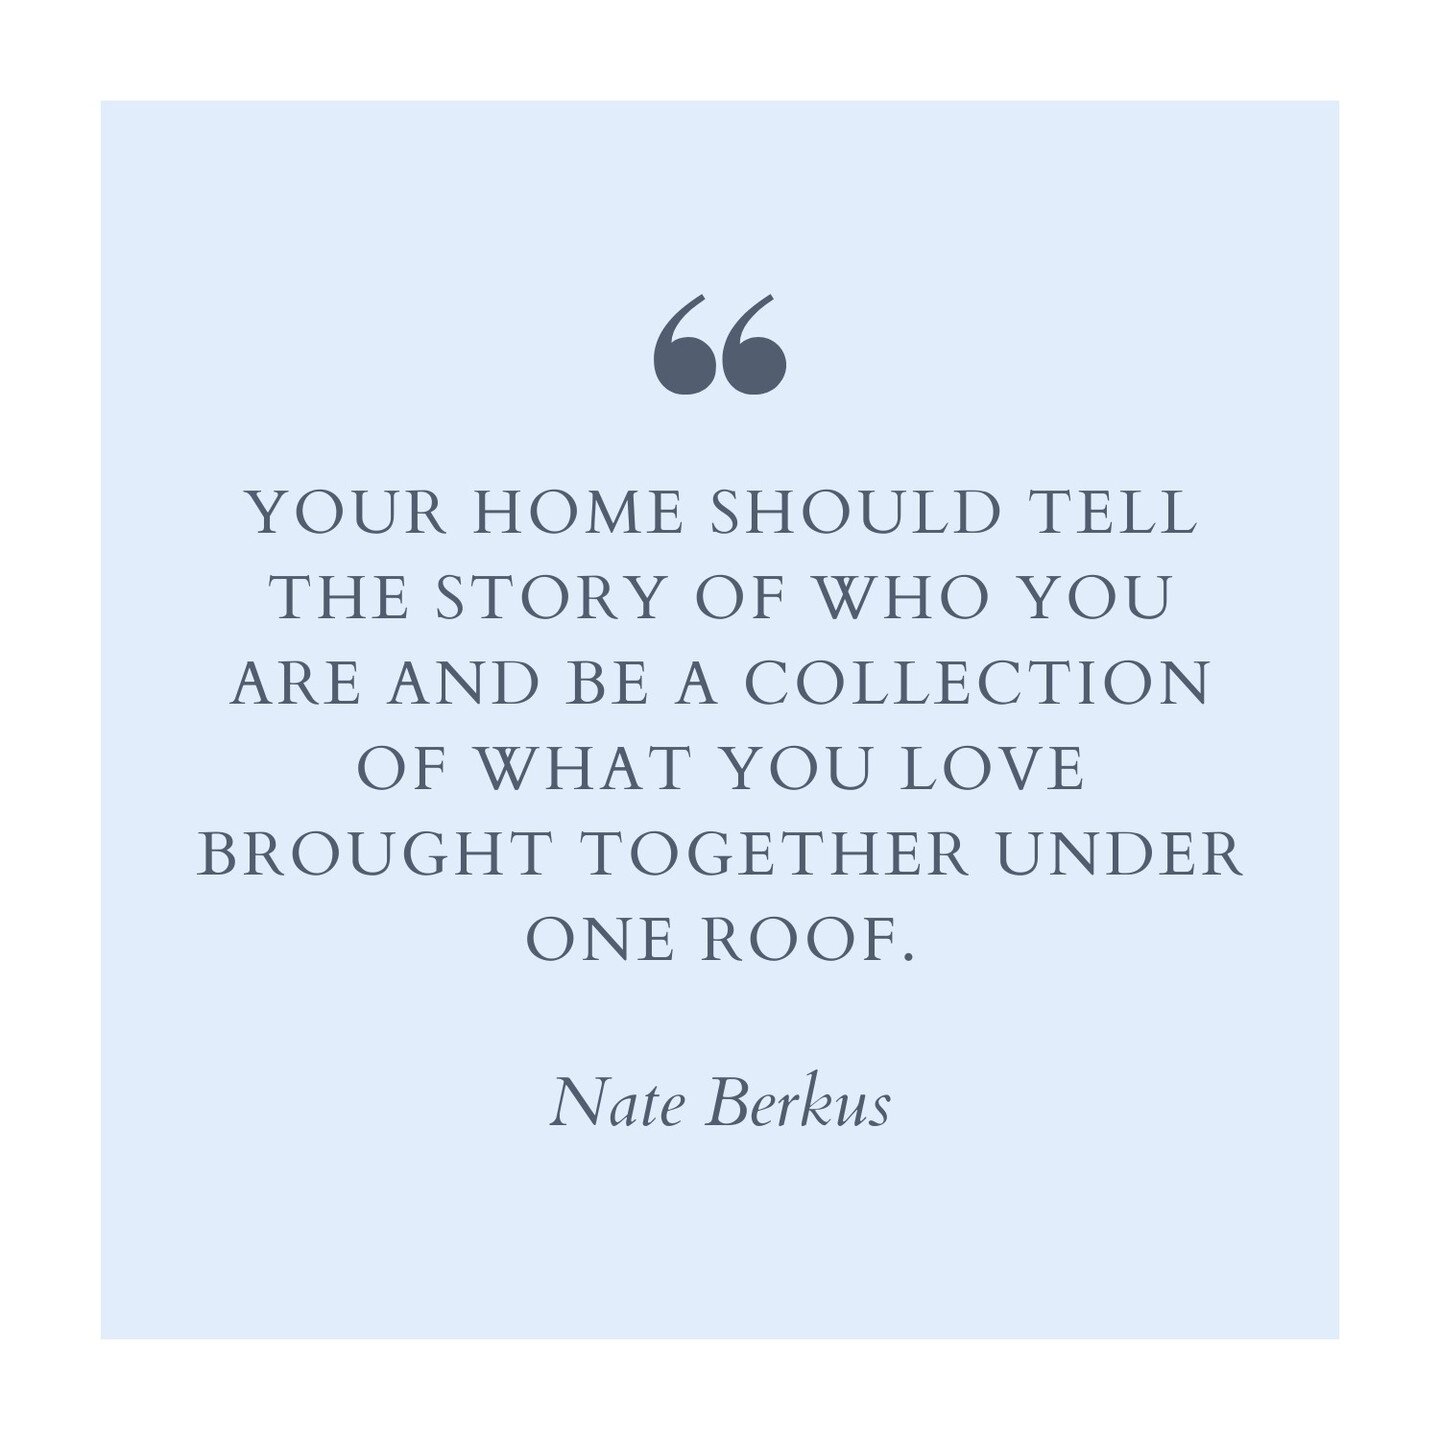 I couldn't agree more! 
.
.
.
.
#interiordesigner
#njdesigner
#housebeautfiul
#interiordesign